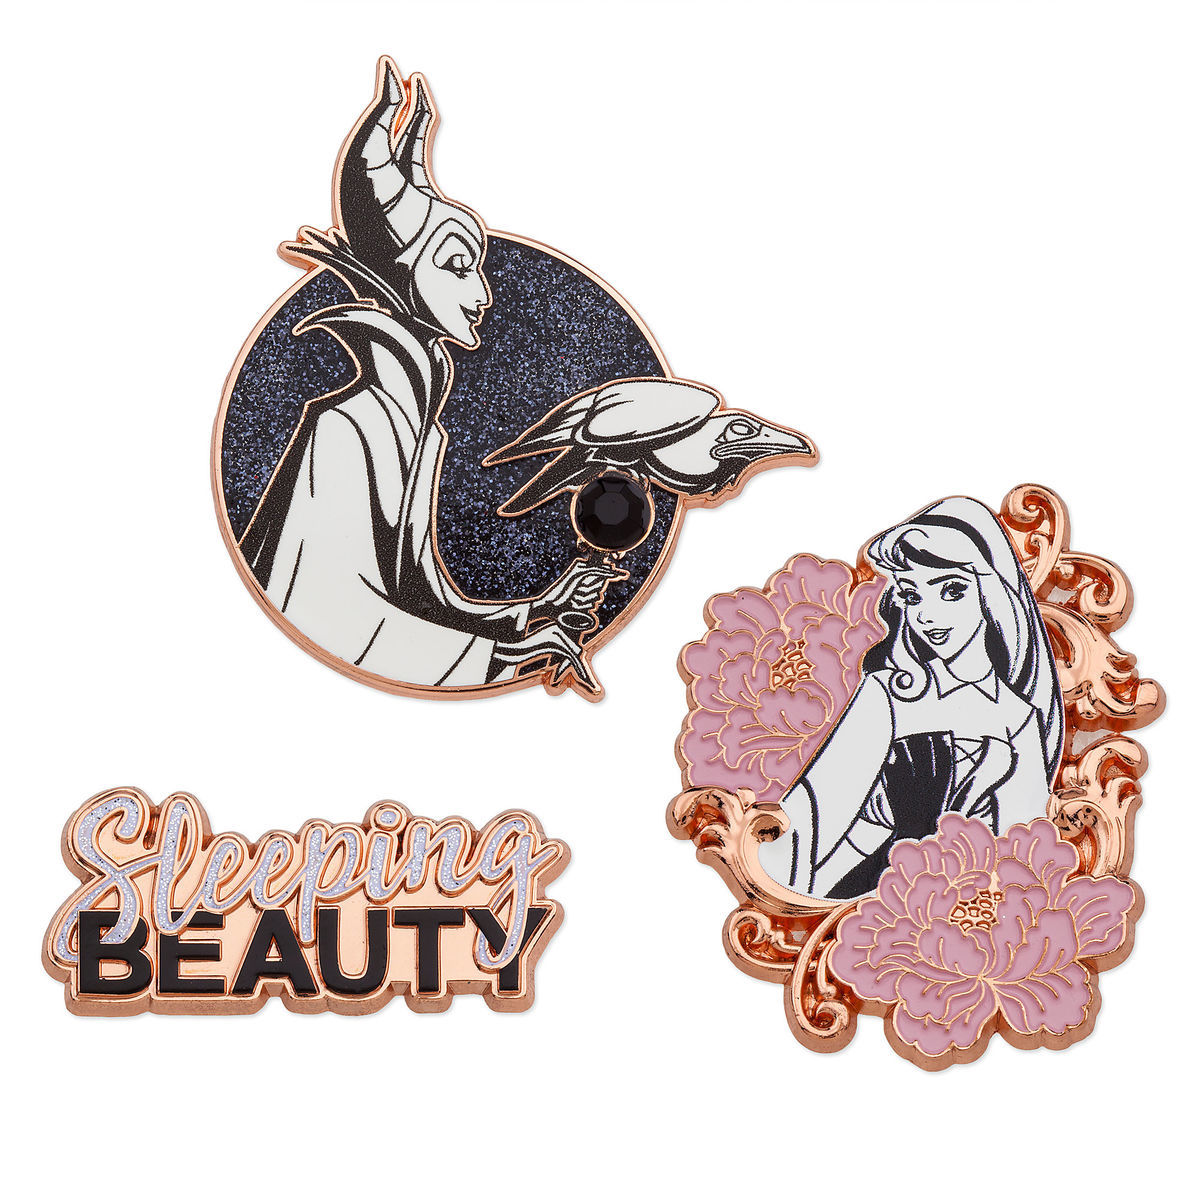 New Merchandise To Celebrate Sleeping Beauty's 60th Anniversary